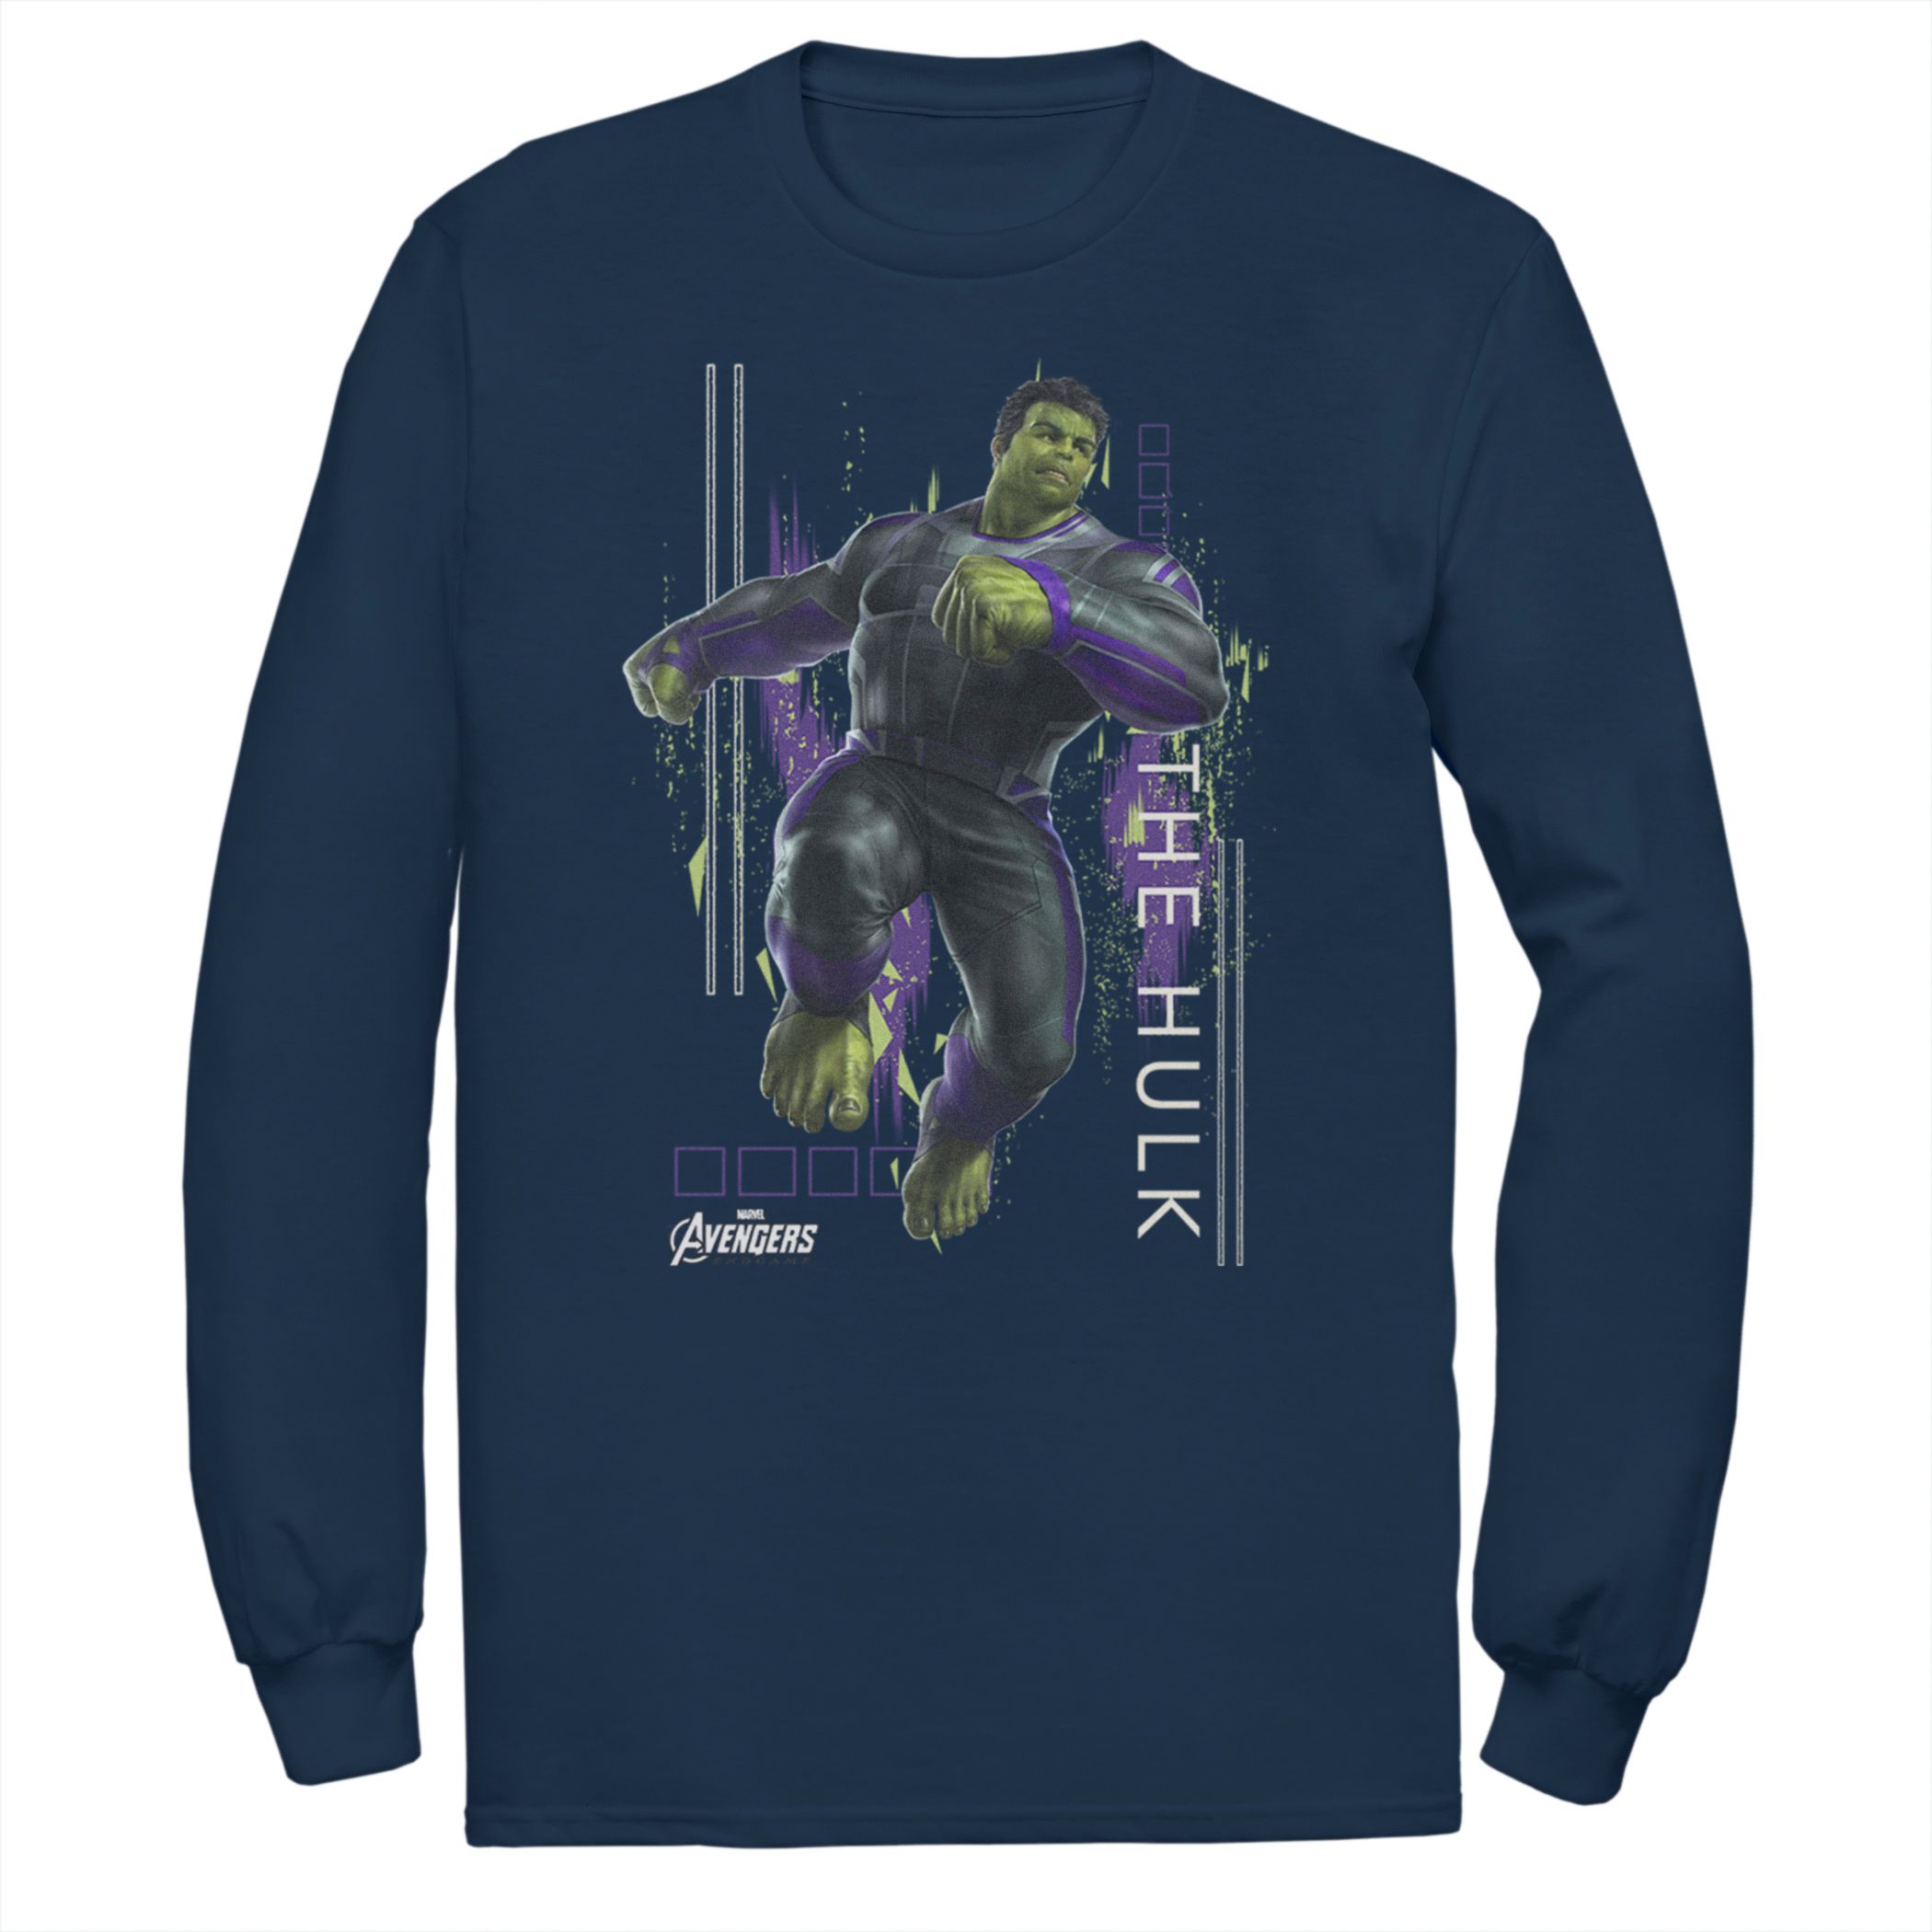 Мужская футболка с геометрическим рисунком «Marvel Avengers Endgame Hulk» Licensed Character